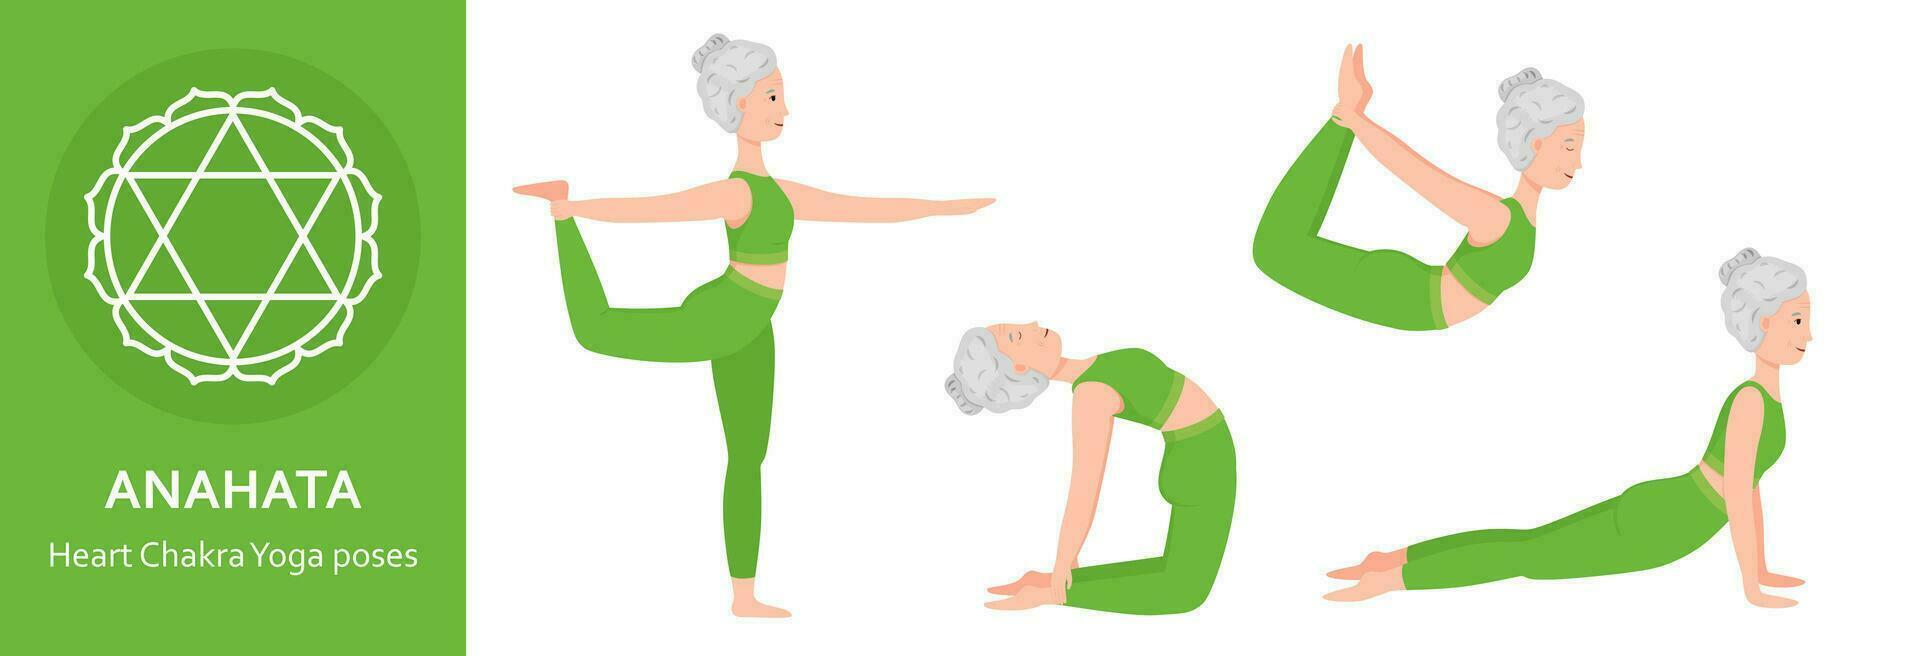 hart chakra yoga poseert. ouderen vrouw beoefenen anahata chakra yoga asana. gezond levensstijl. vlak tekenfilm karakter. vector illustratie